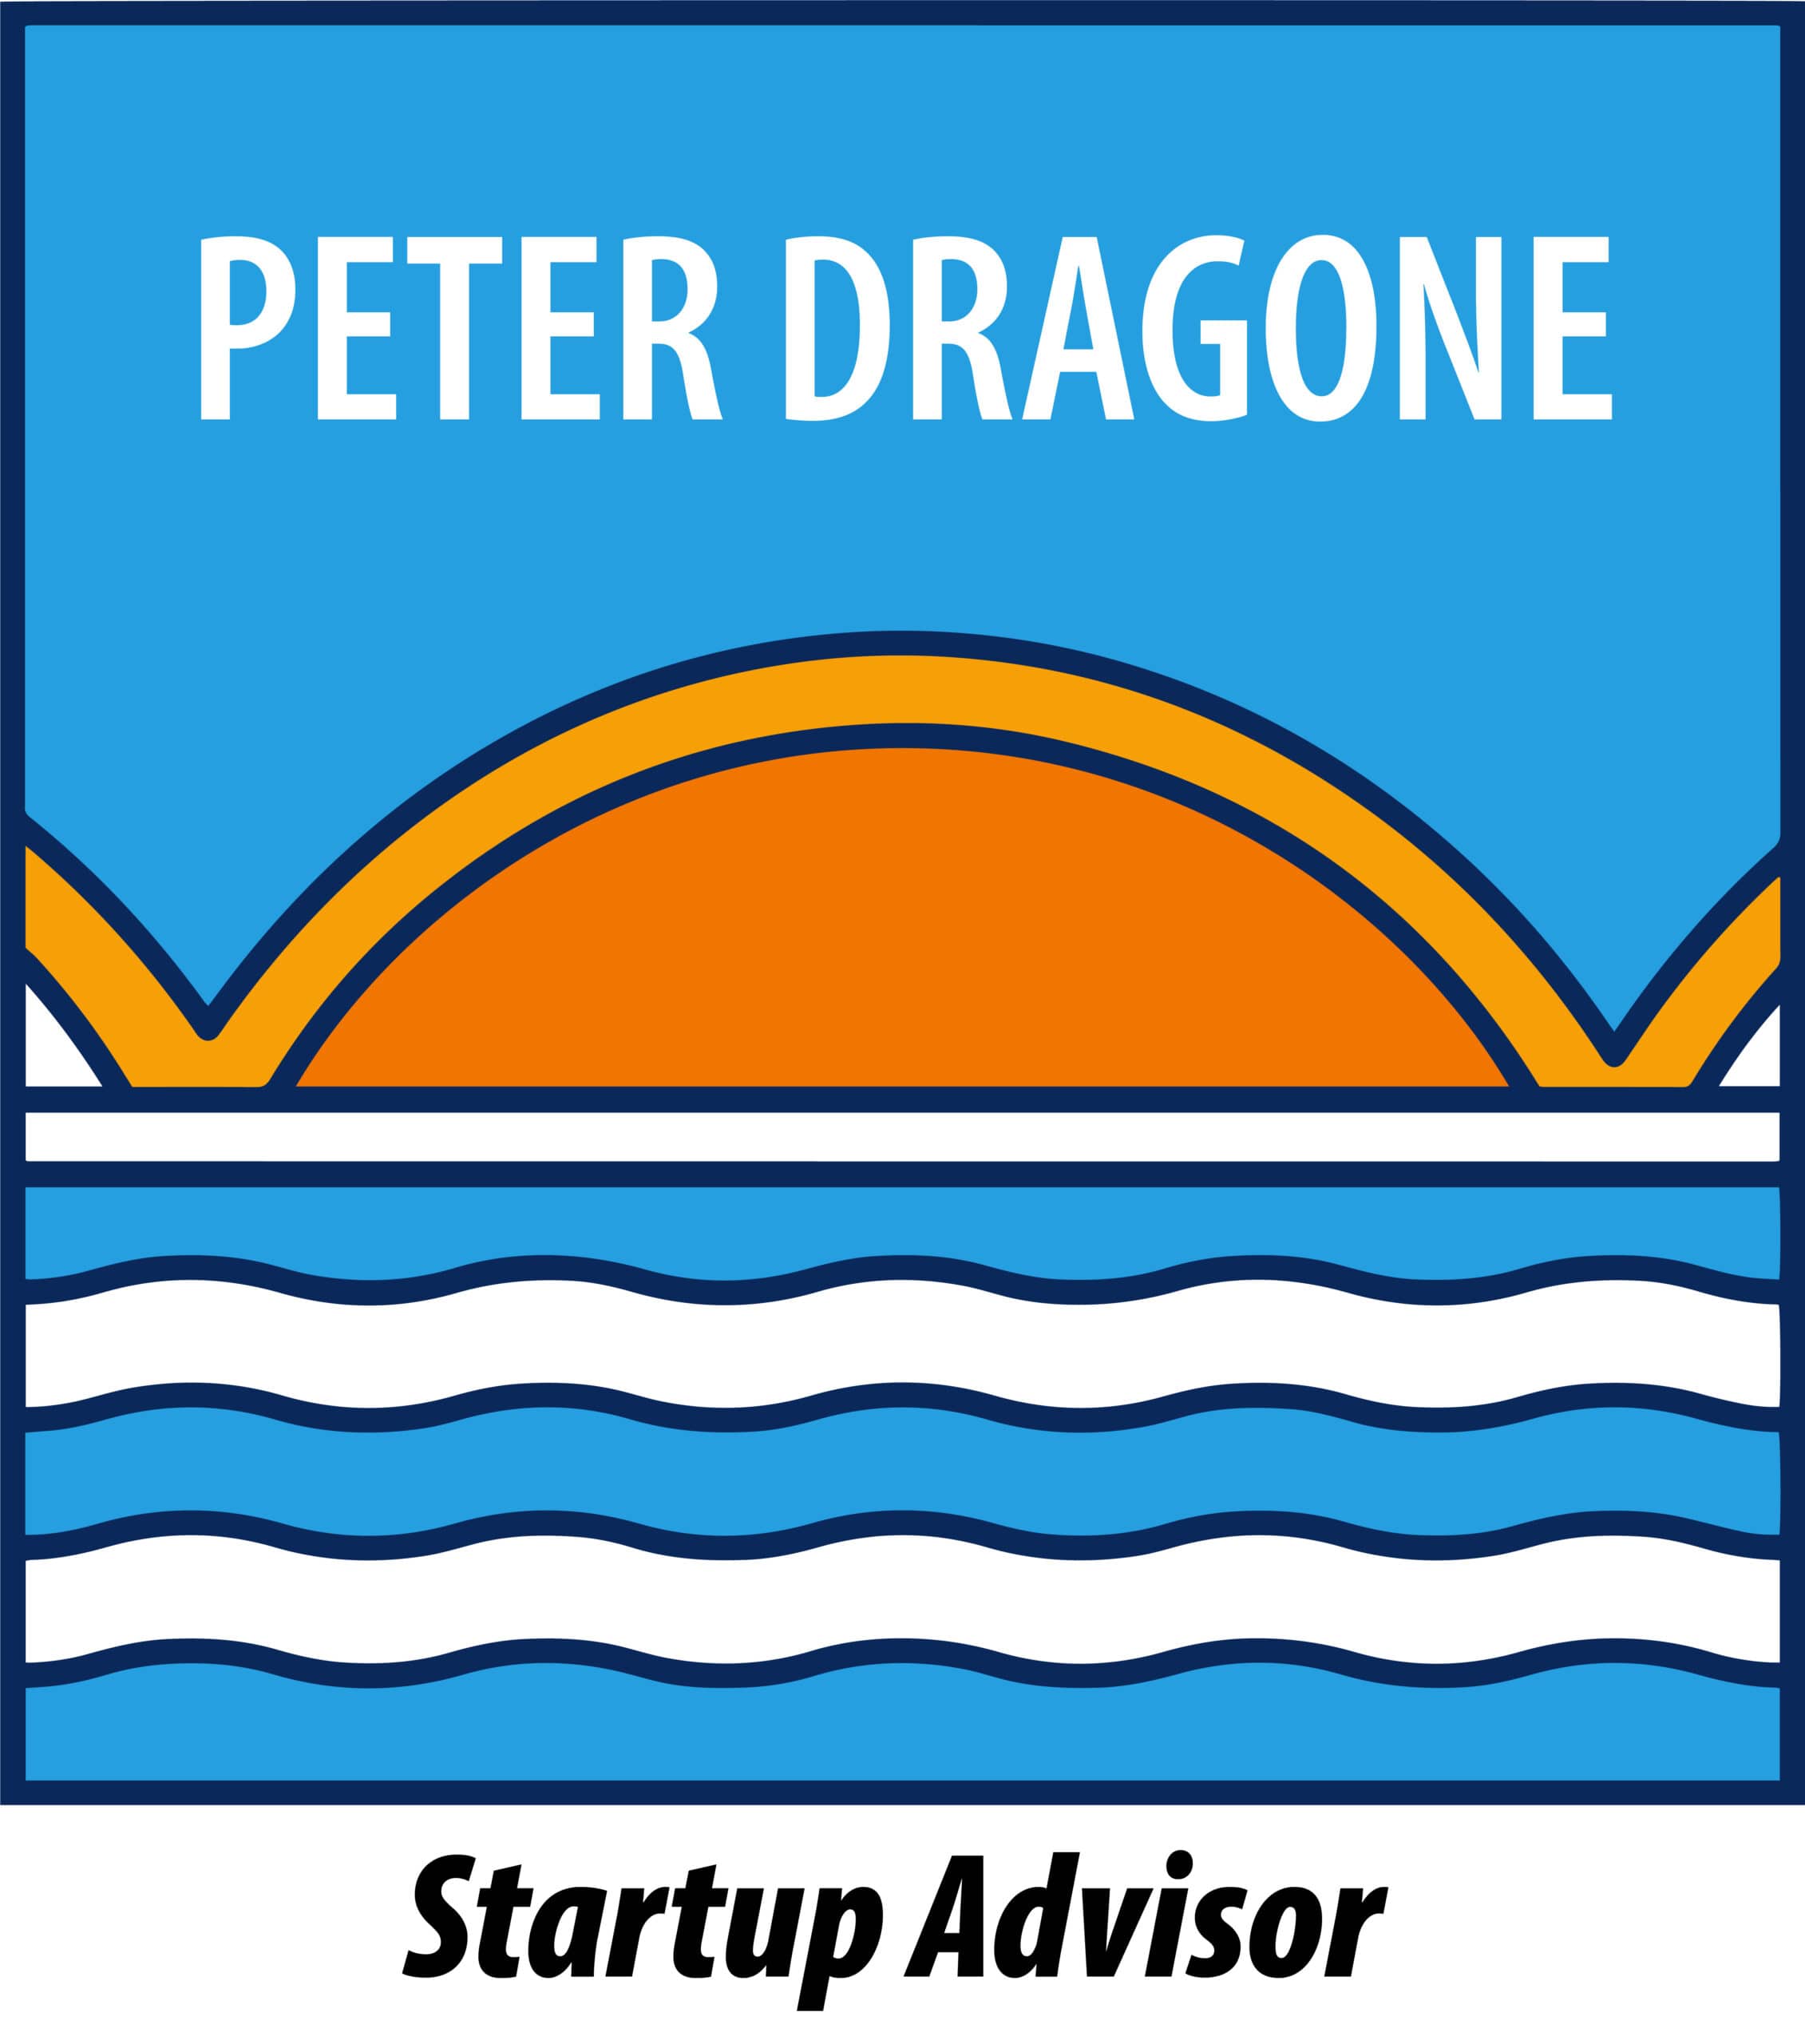 Peter Dragone - Co-Founder Keurig Inc. Business Advisor